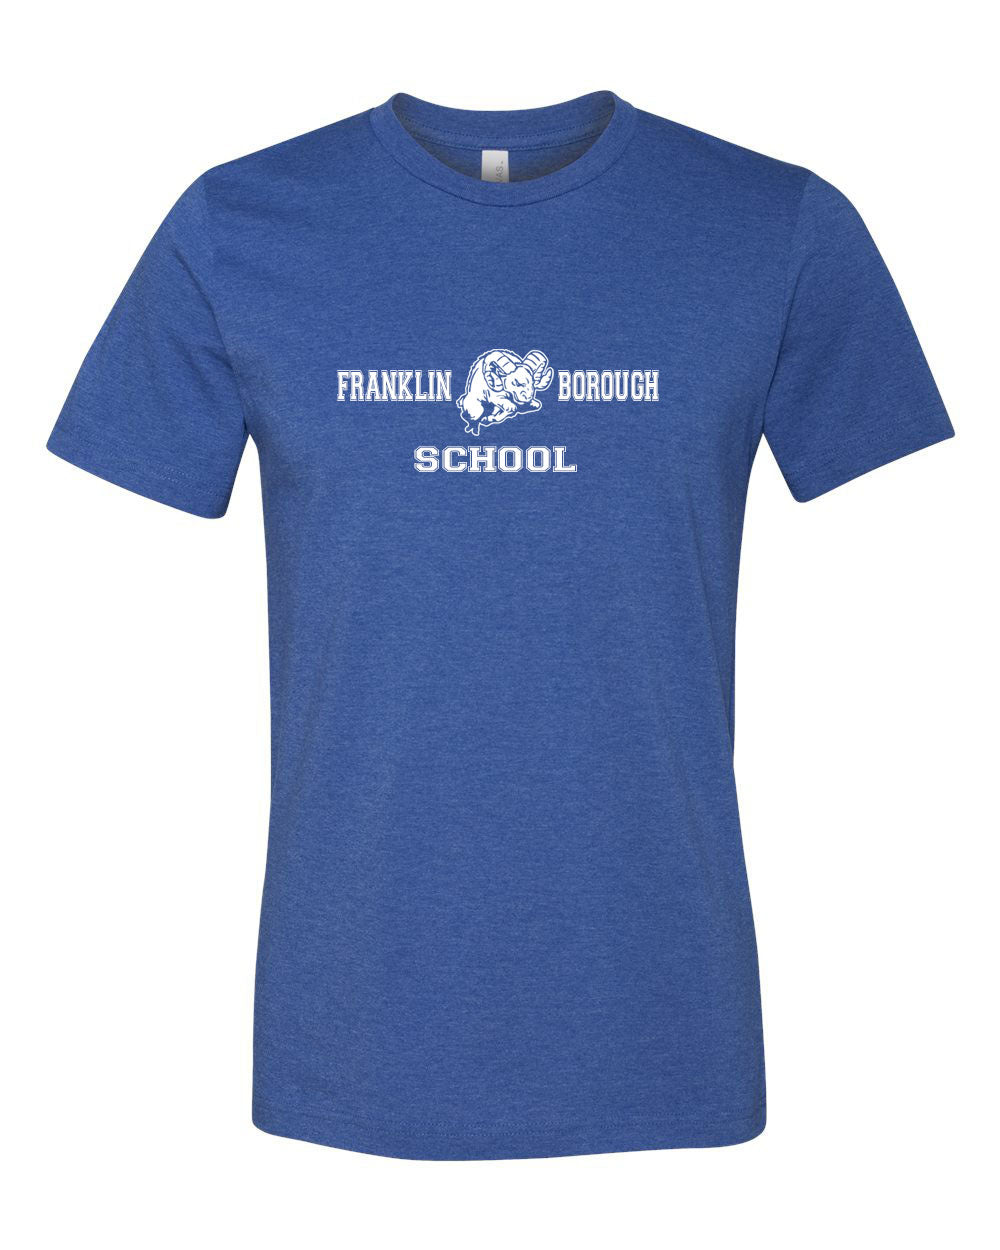 Franklin School Design 3 T-Shirt